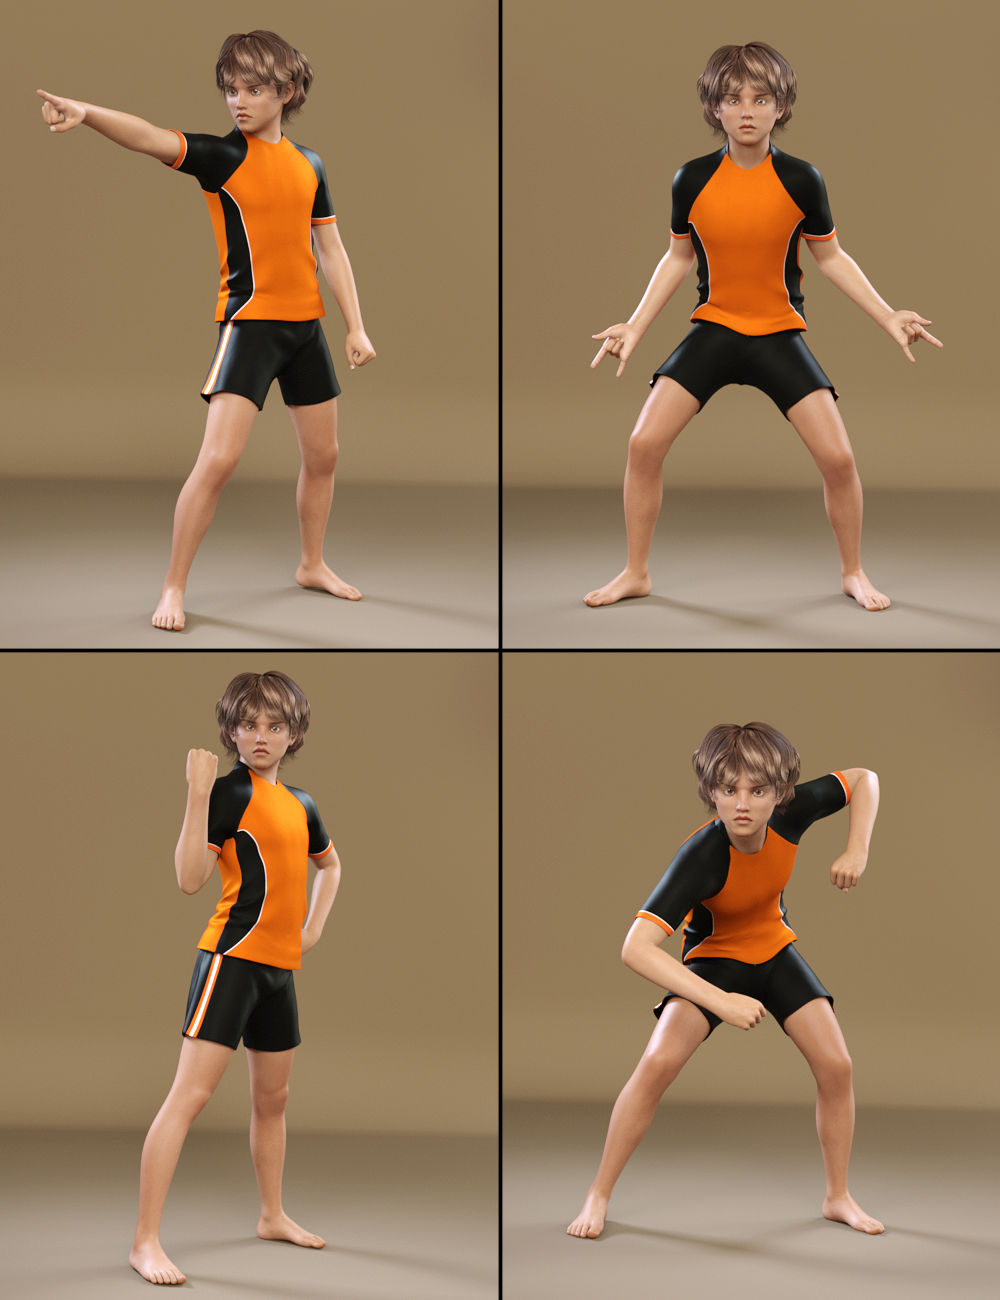 Hero Boy Poses for Tween Ryan 7 by: Val3dart, 3D Models by Daz 3D